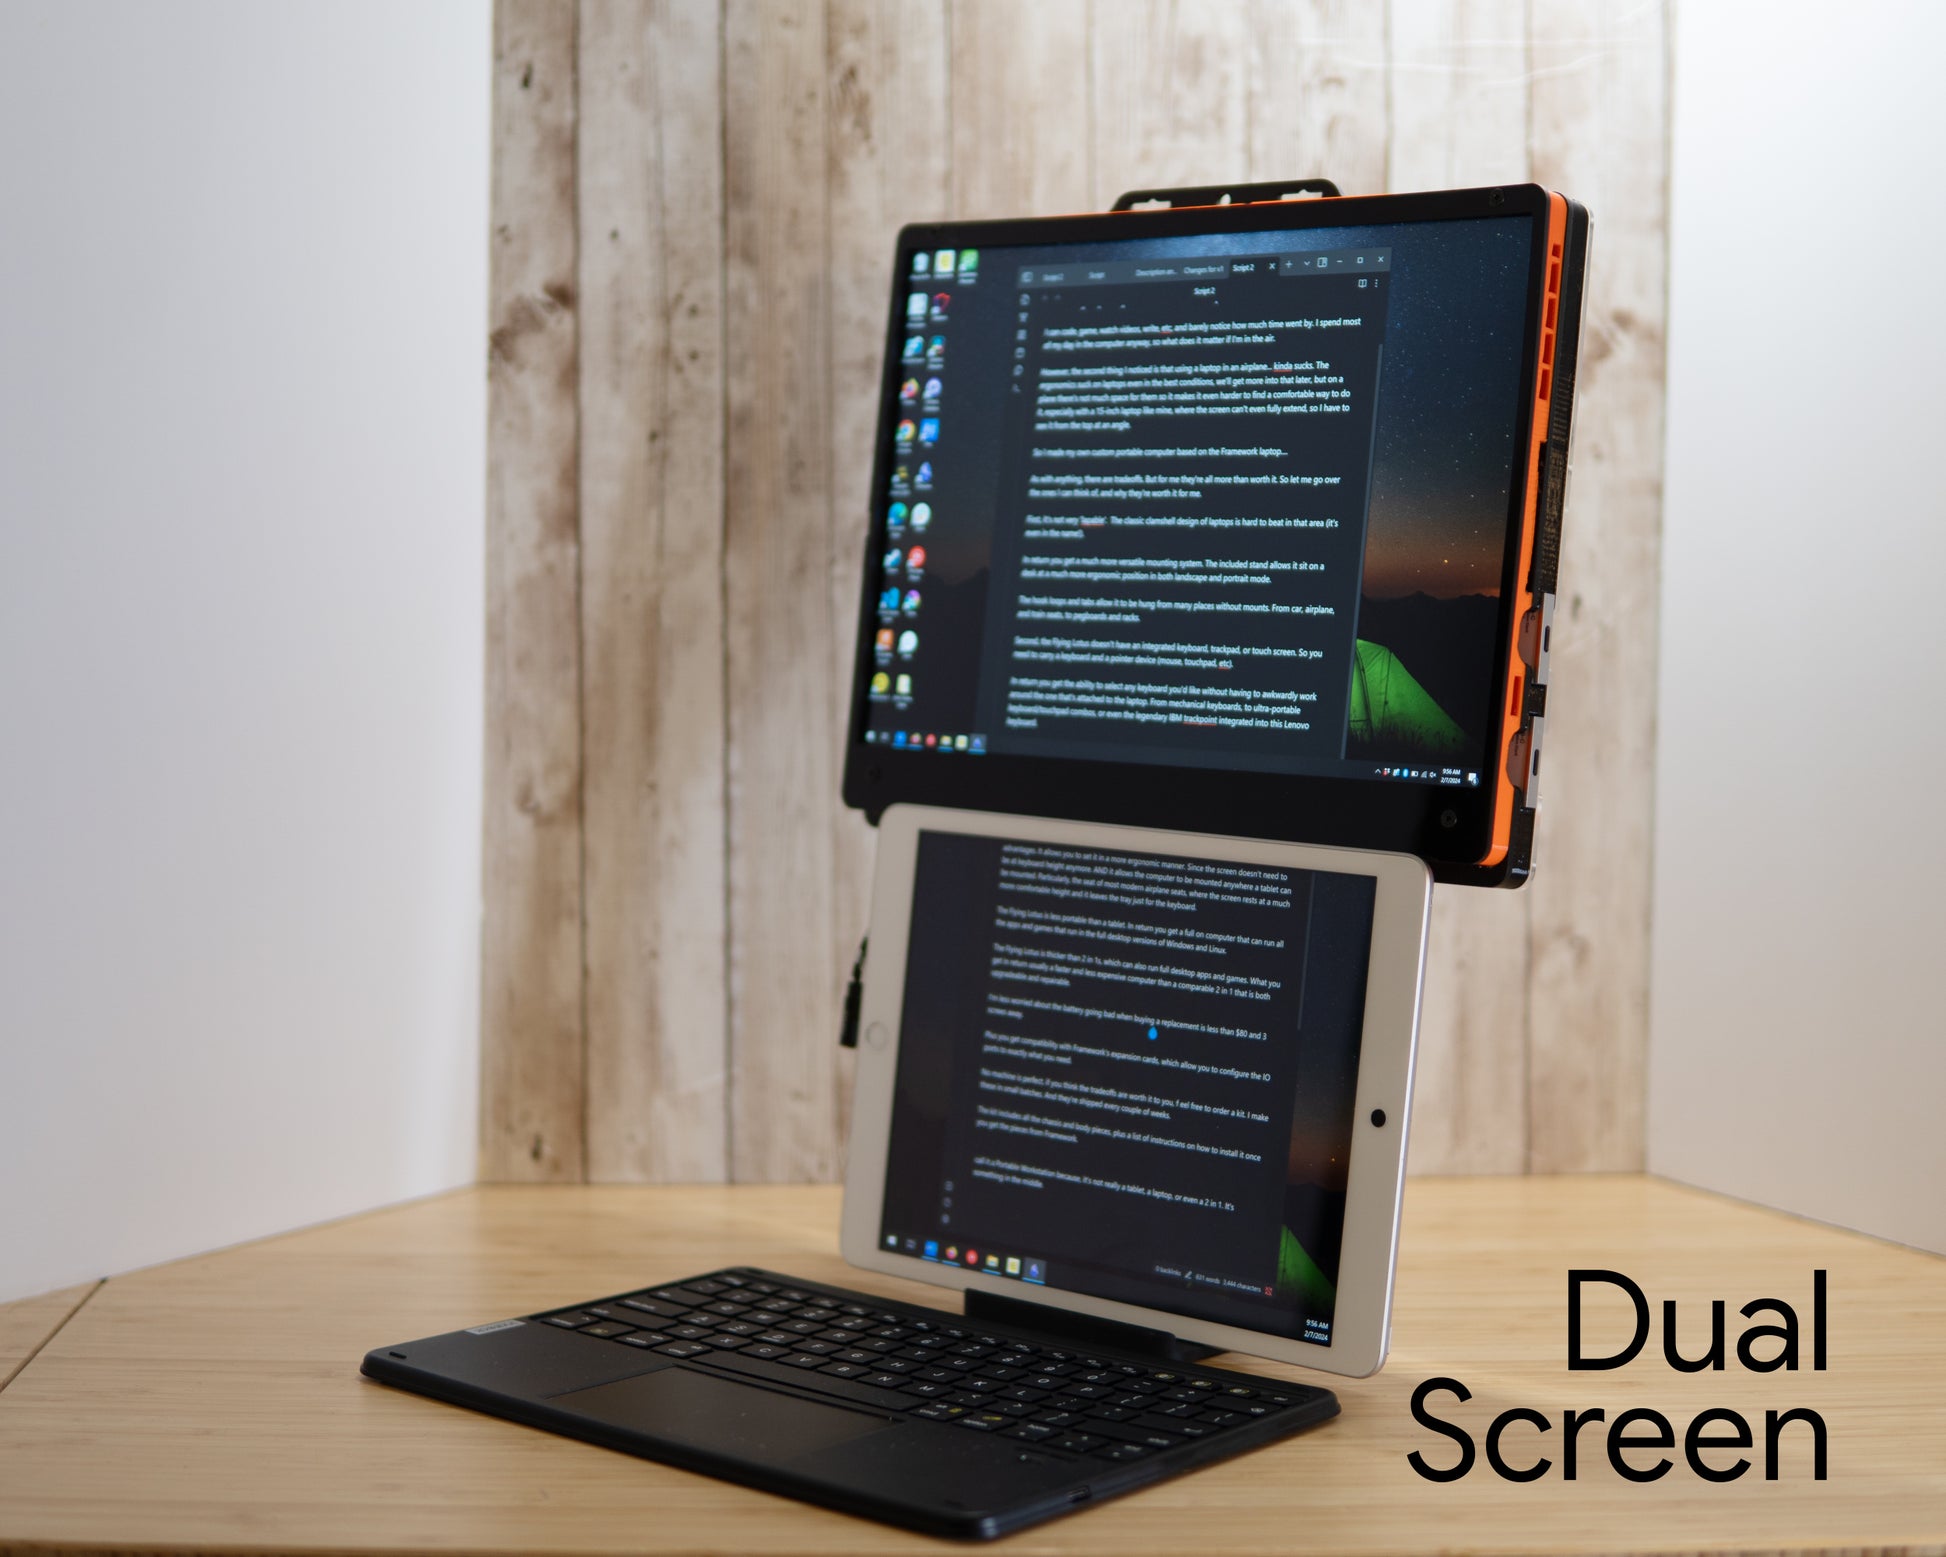 Dual Screen mode with an iPad